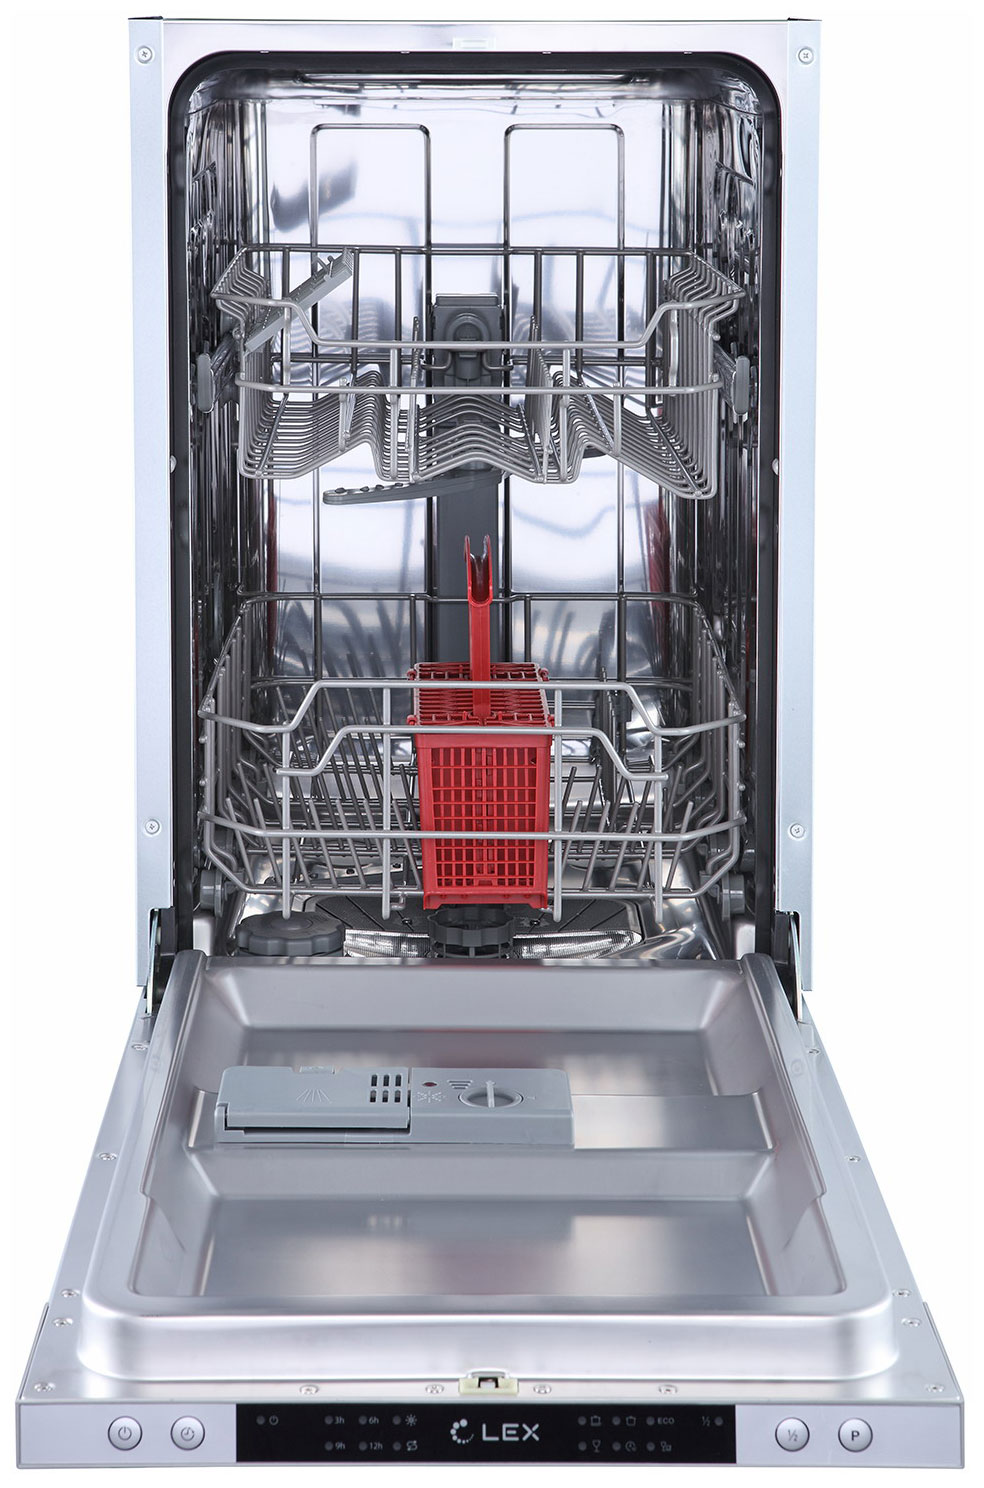 Встраиваемая посудомоечная машина LEX PM 4562 B посудомоечная машина встраиваемая lex pm 4562 b